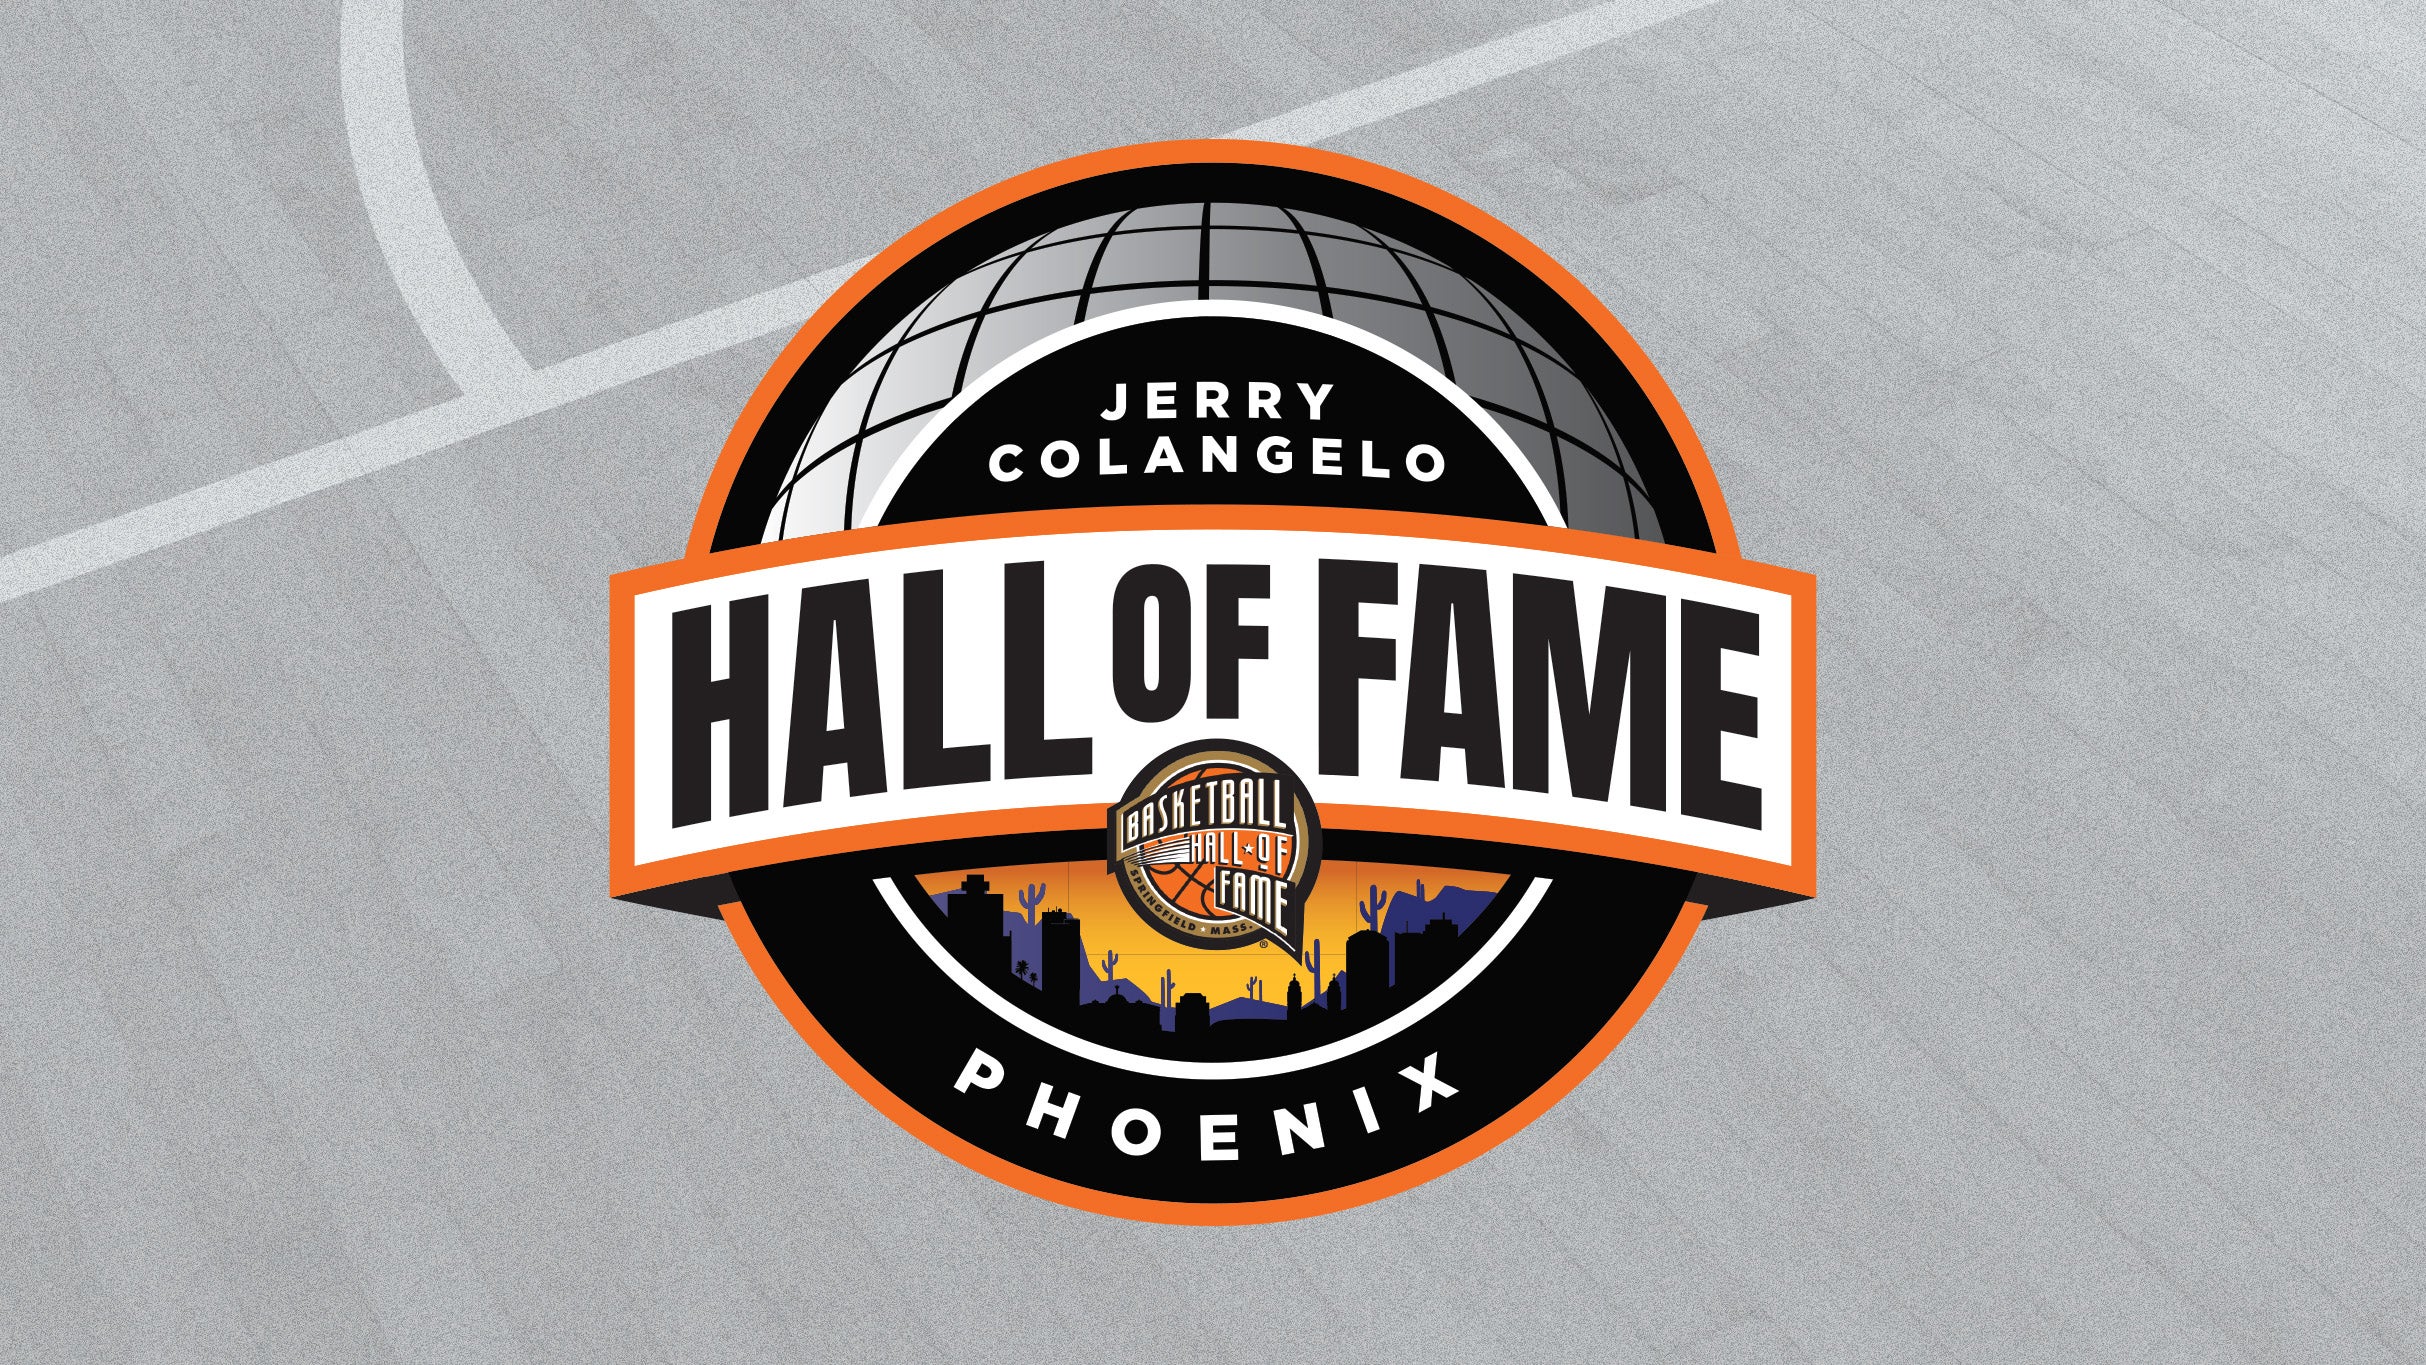 Jerry Colangelo's Hall of Fame - Phoenix - Women's NCAA in Phoenix promo photo for Mercury presale offer code